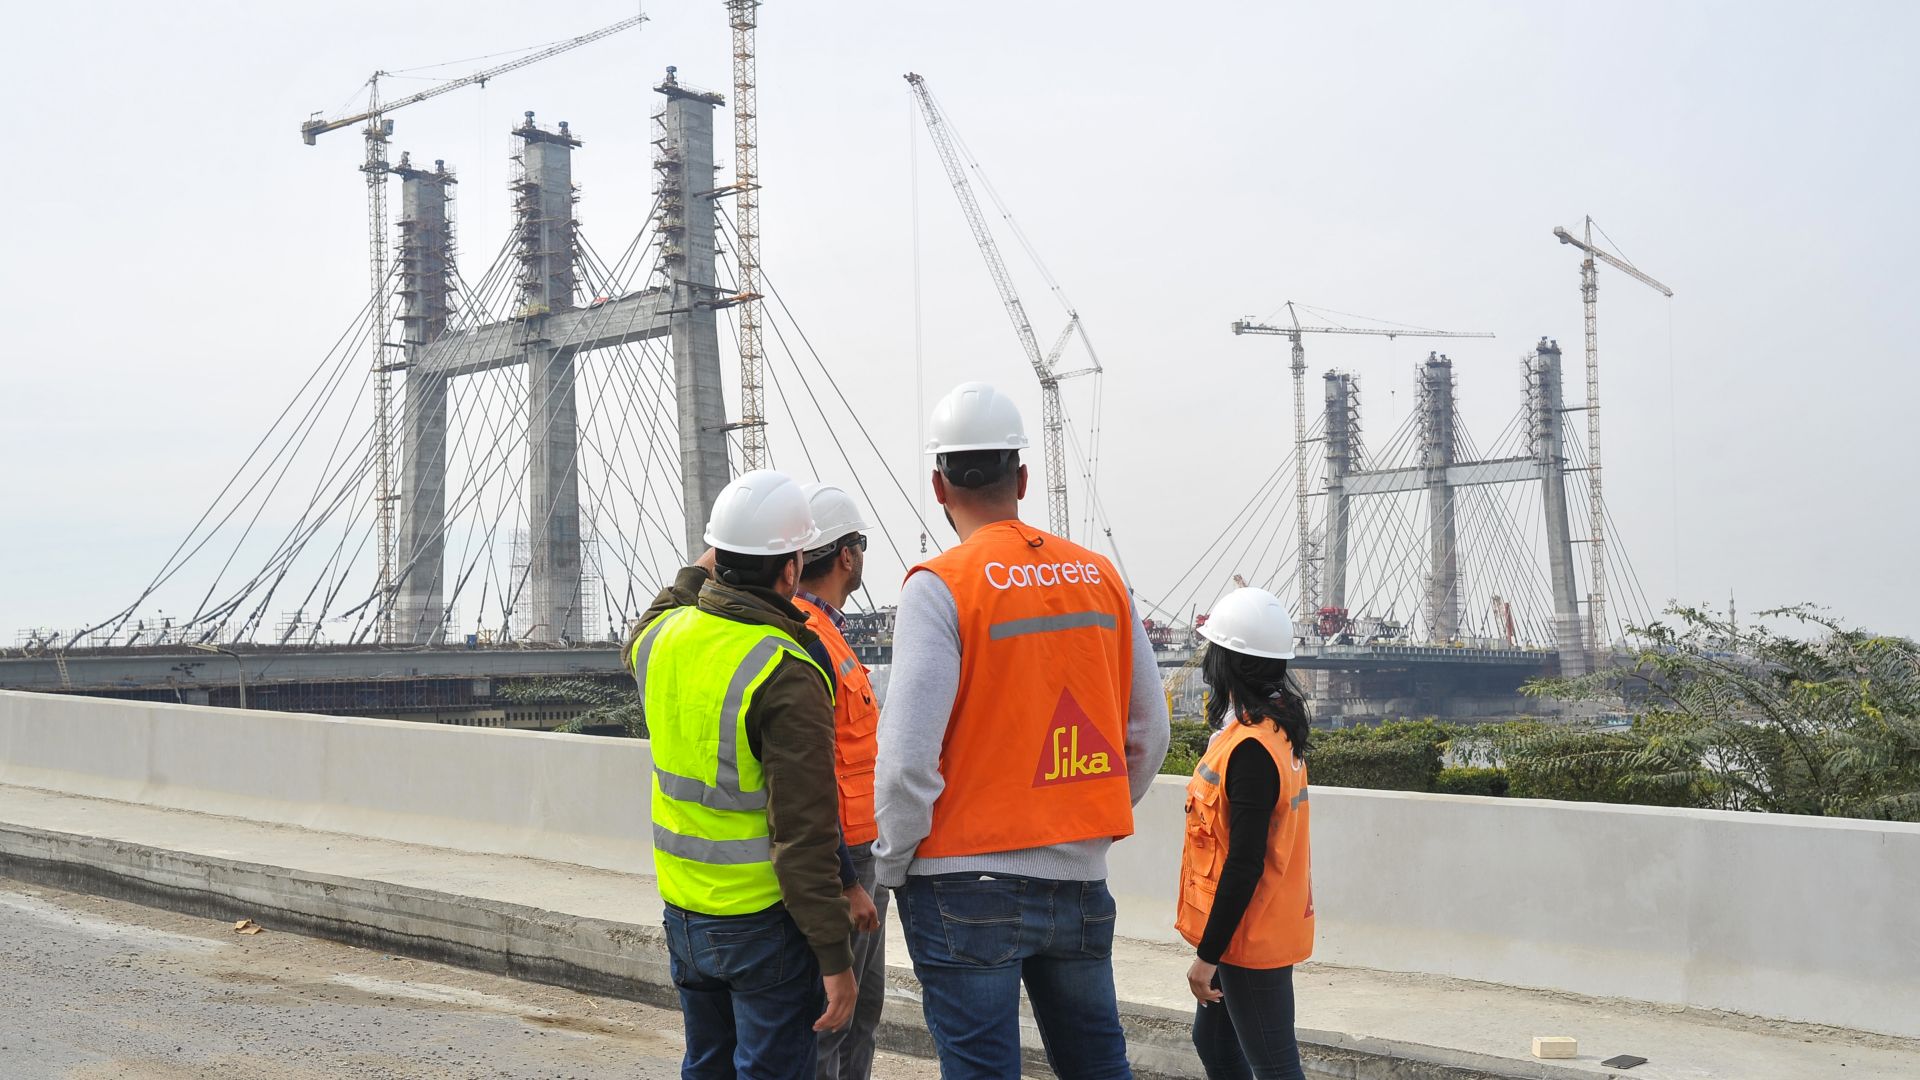 Sika concrete expert advising engineers during bridge construction